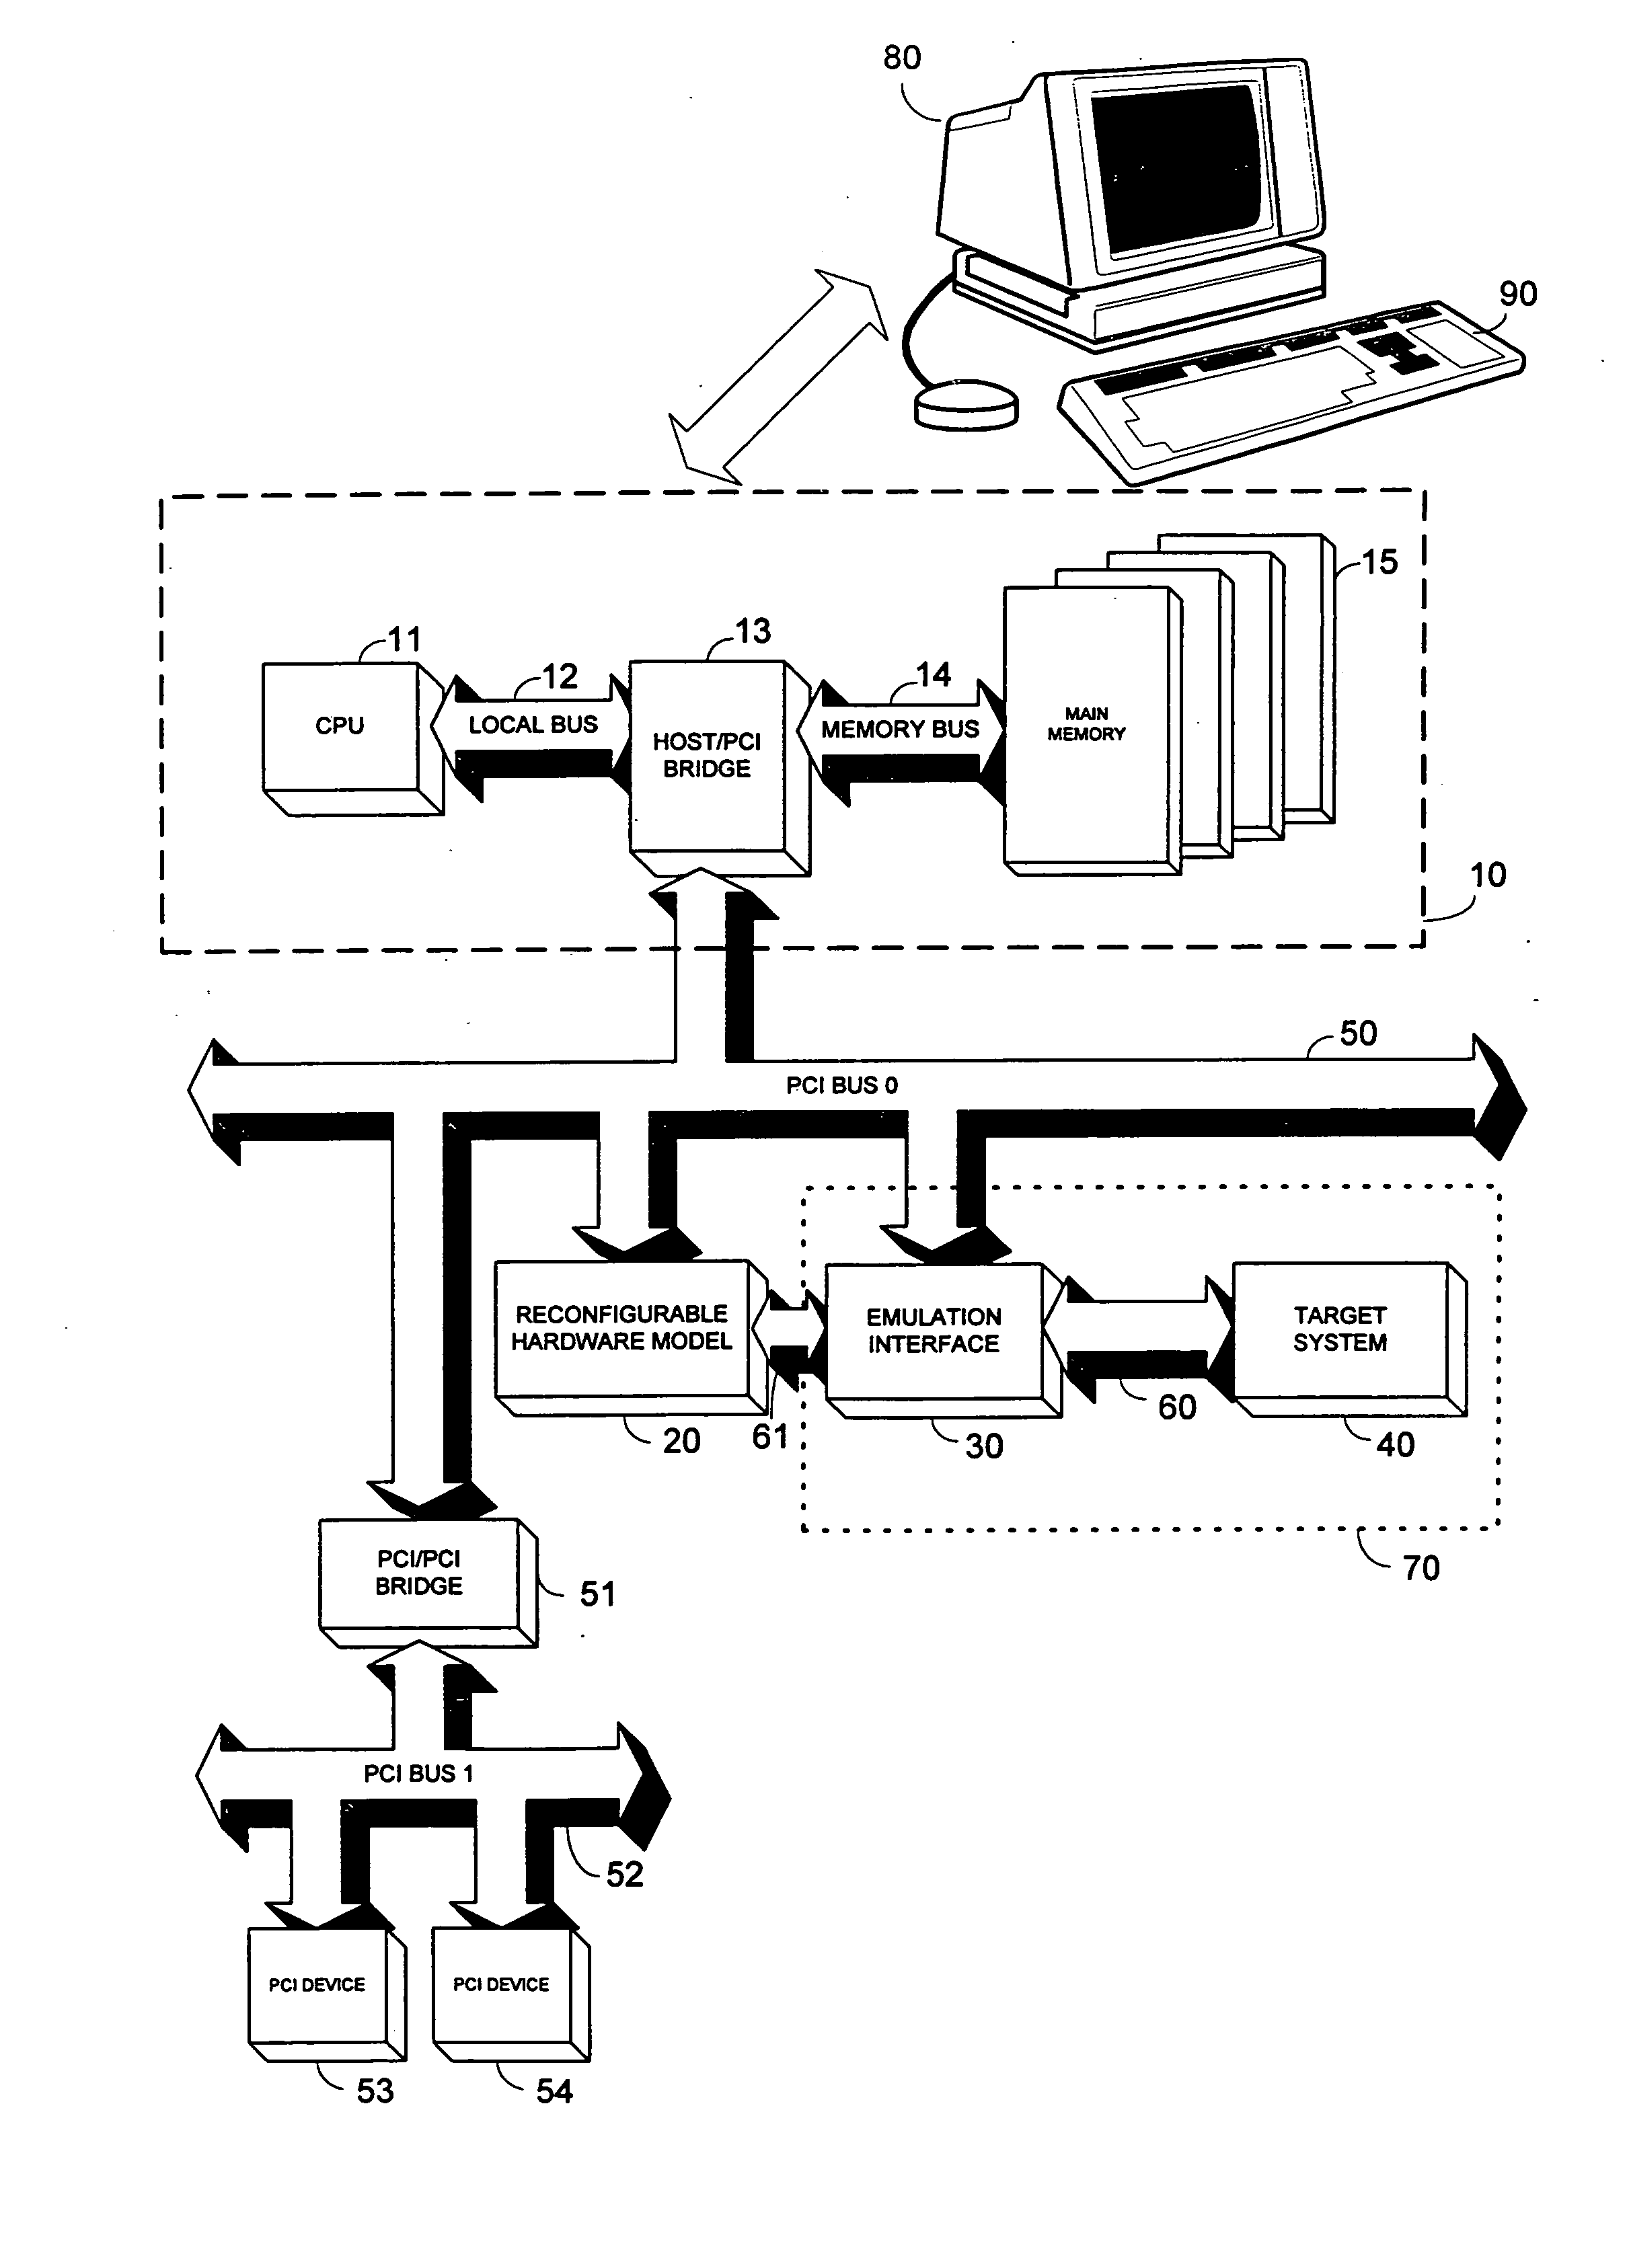 Inter-chip communication system